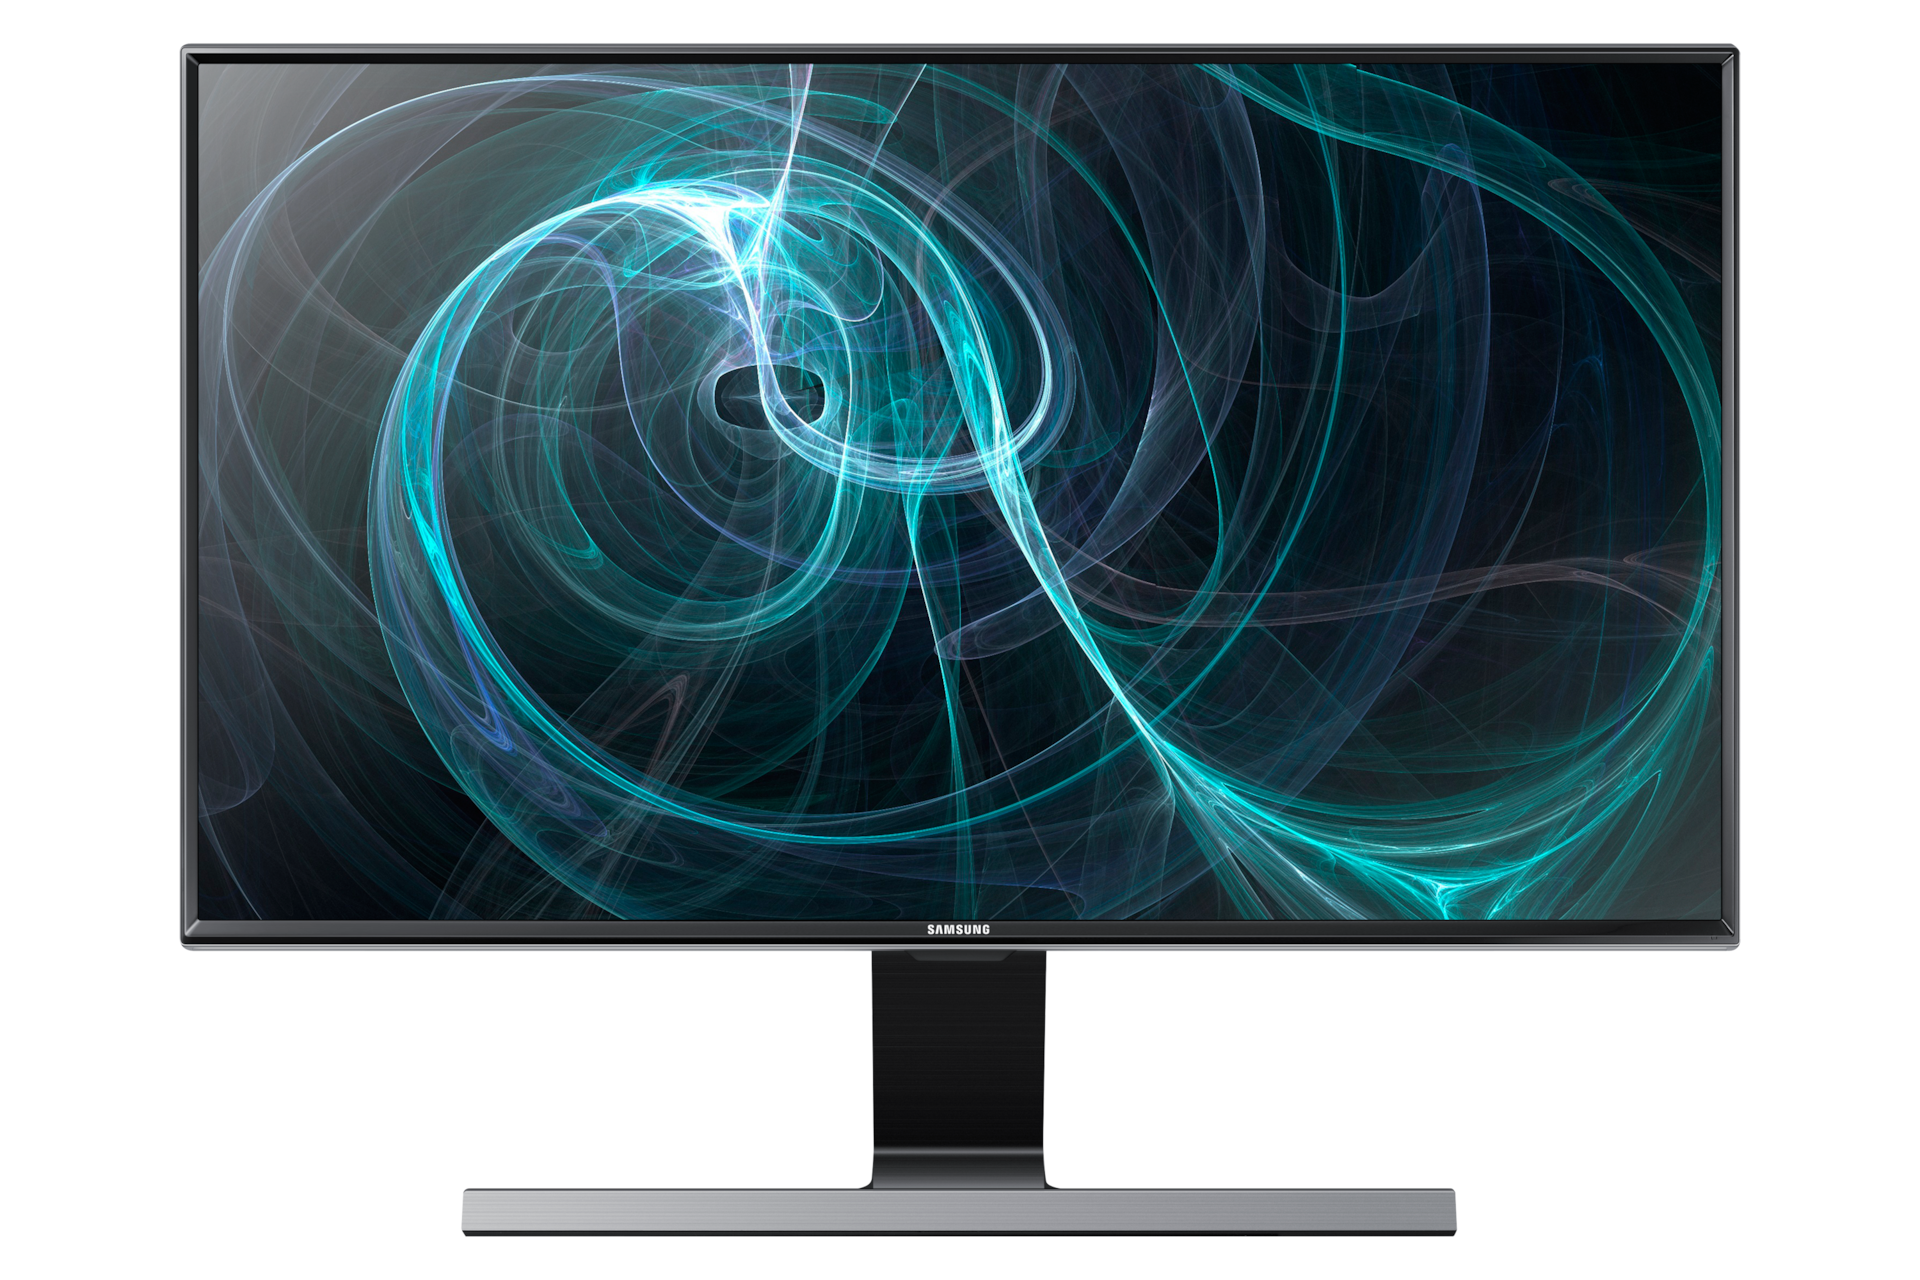 italiano disco Patológico 27" Premium TV (LED) monitor Doubles as the perfect personal TV TD590 |  LT27D590AK/XK | Samsung Hong Kong